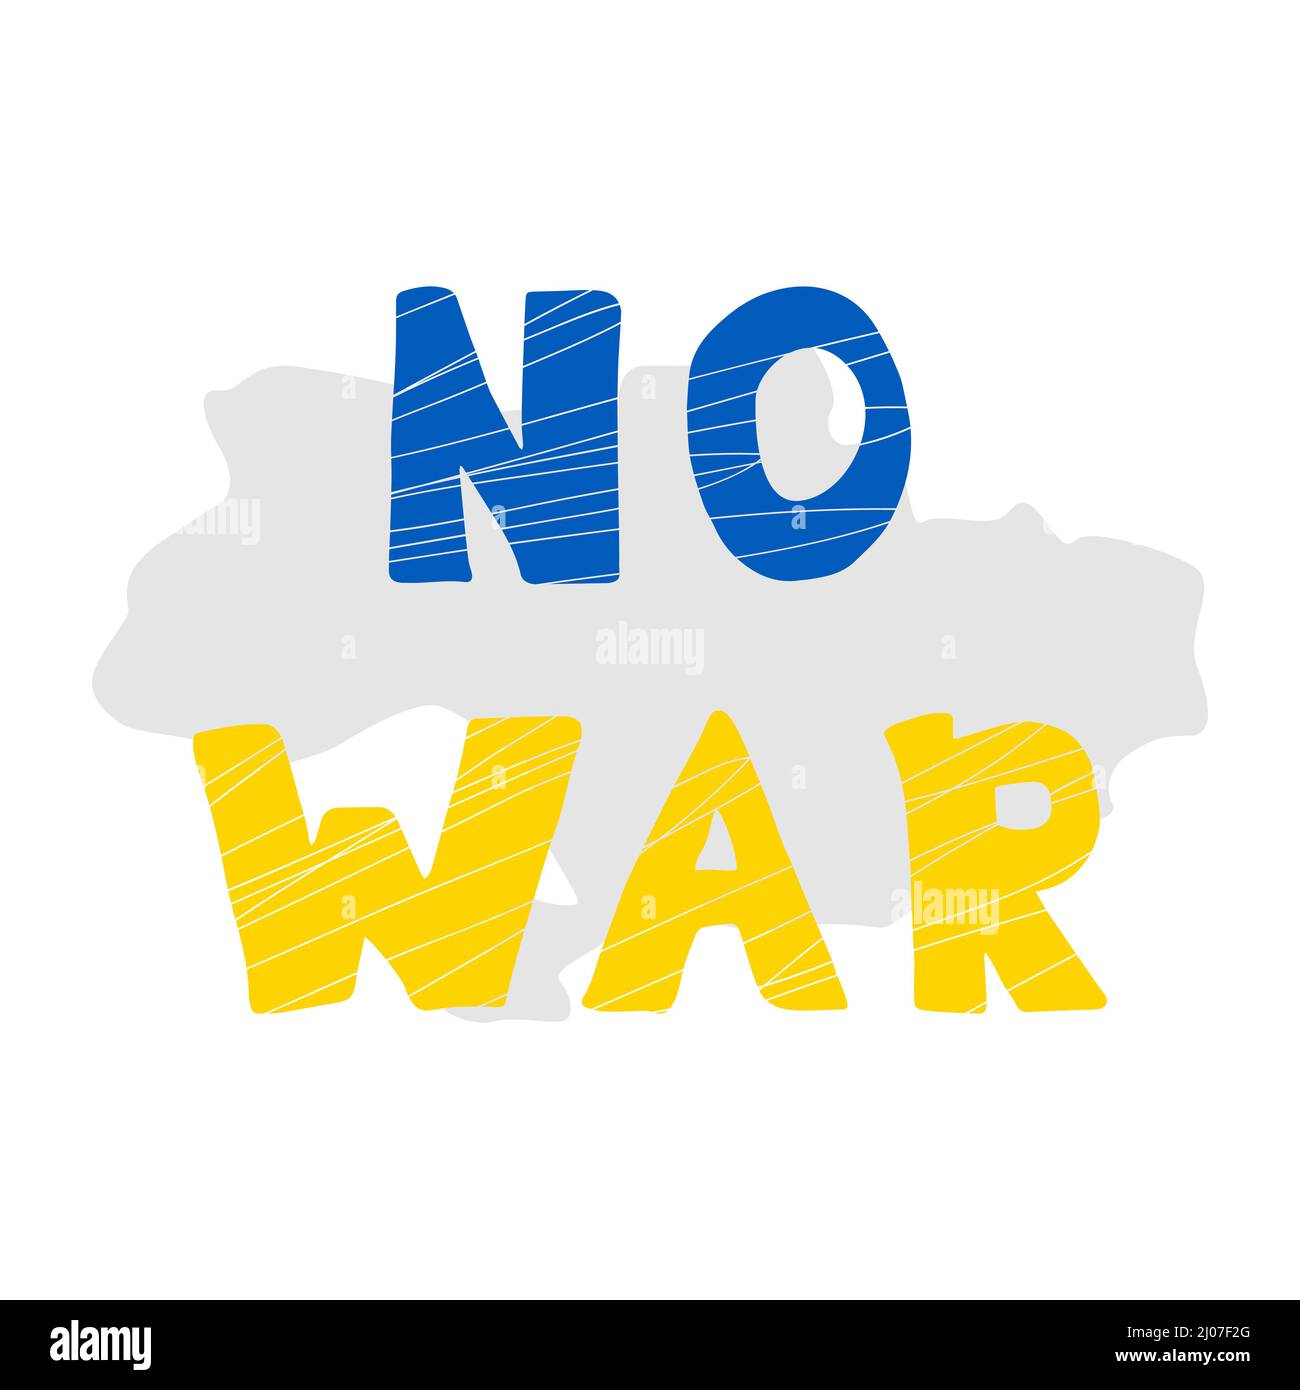 No war in Ukraine vector poster. Concept of Ukrainian and Russian military crisis, conflict between Ukraine and Russia. Stop war sign. Stock Vector